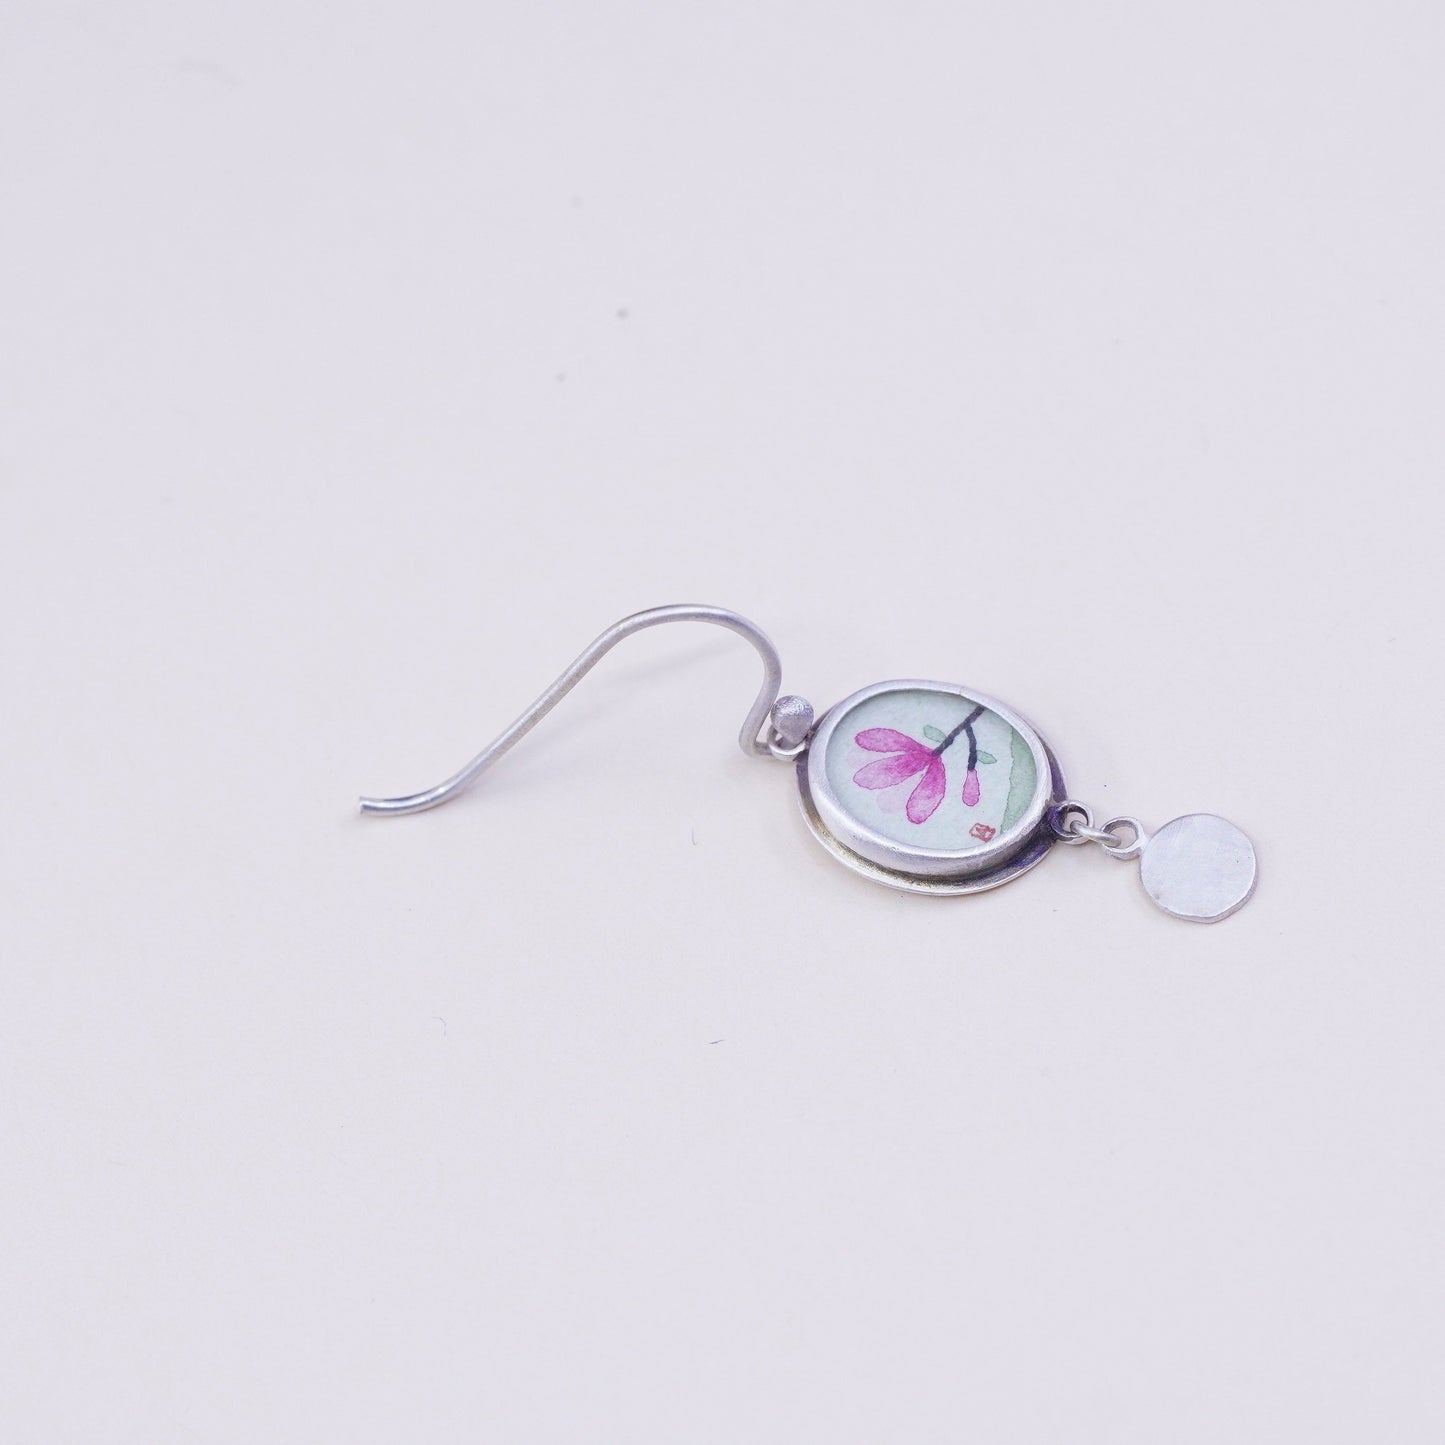 Designer Ananda KHALSA Sterling 925 silver handmade earrings, watercolor pink Mongolia flower, stamped 925 A